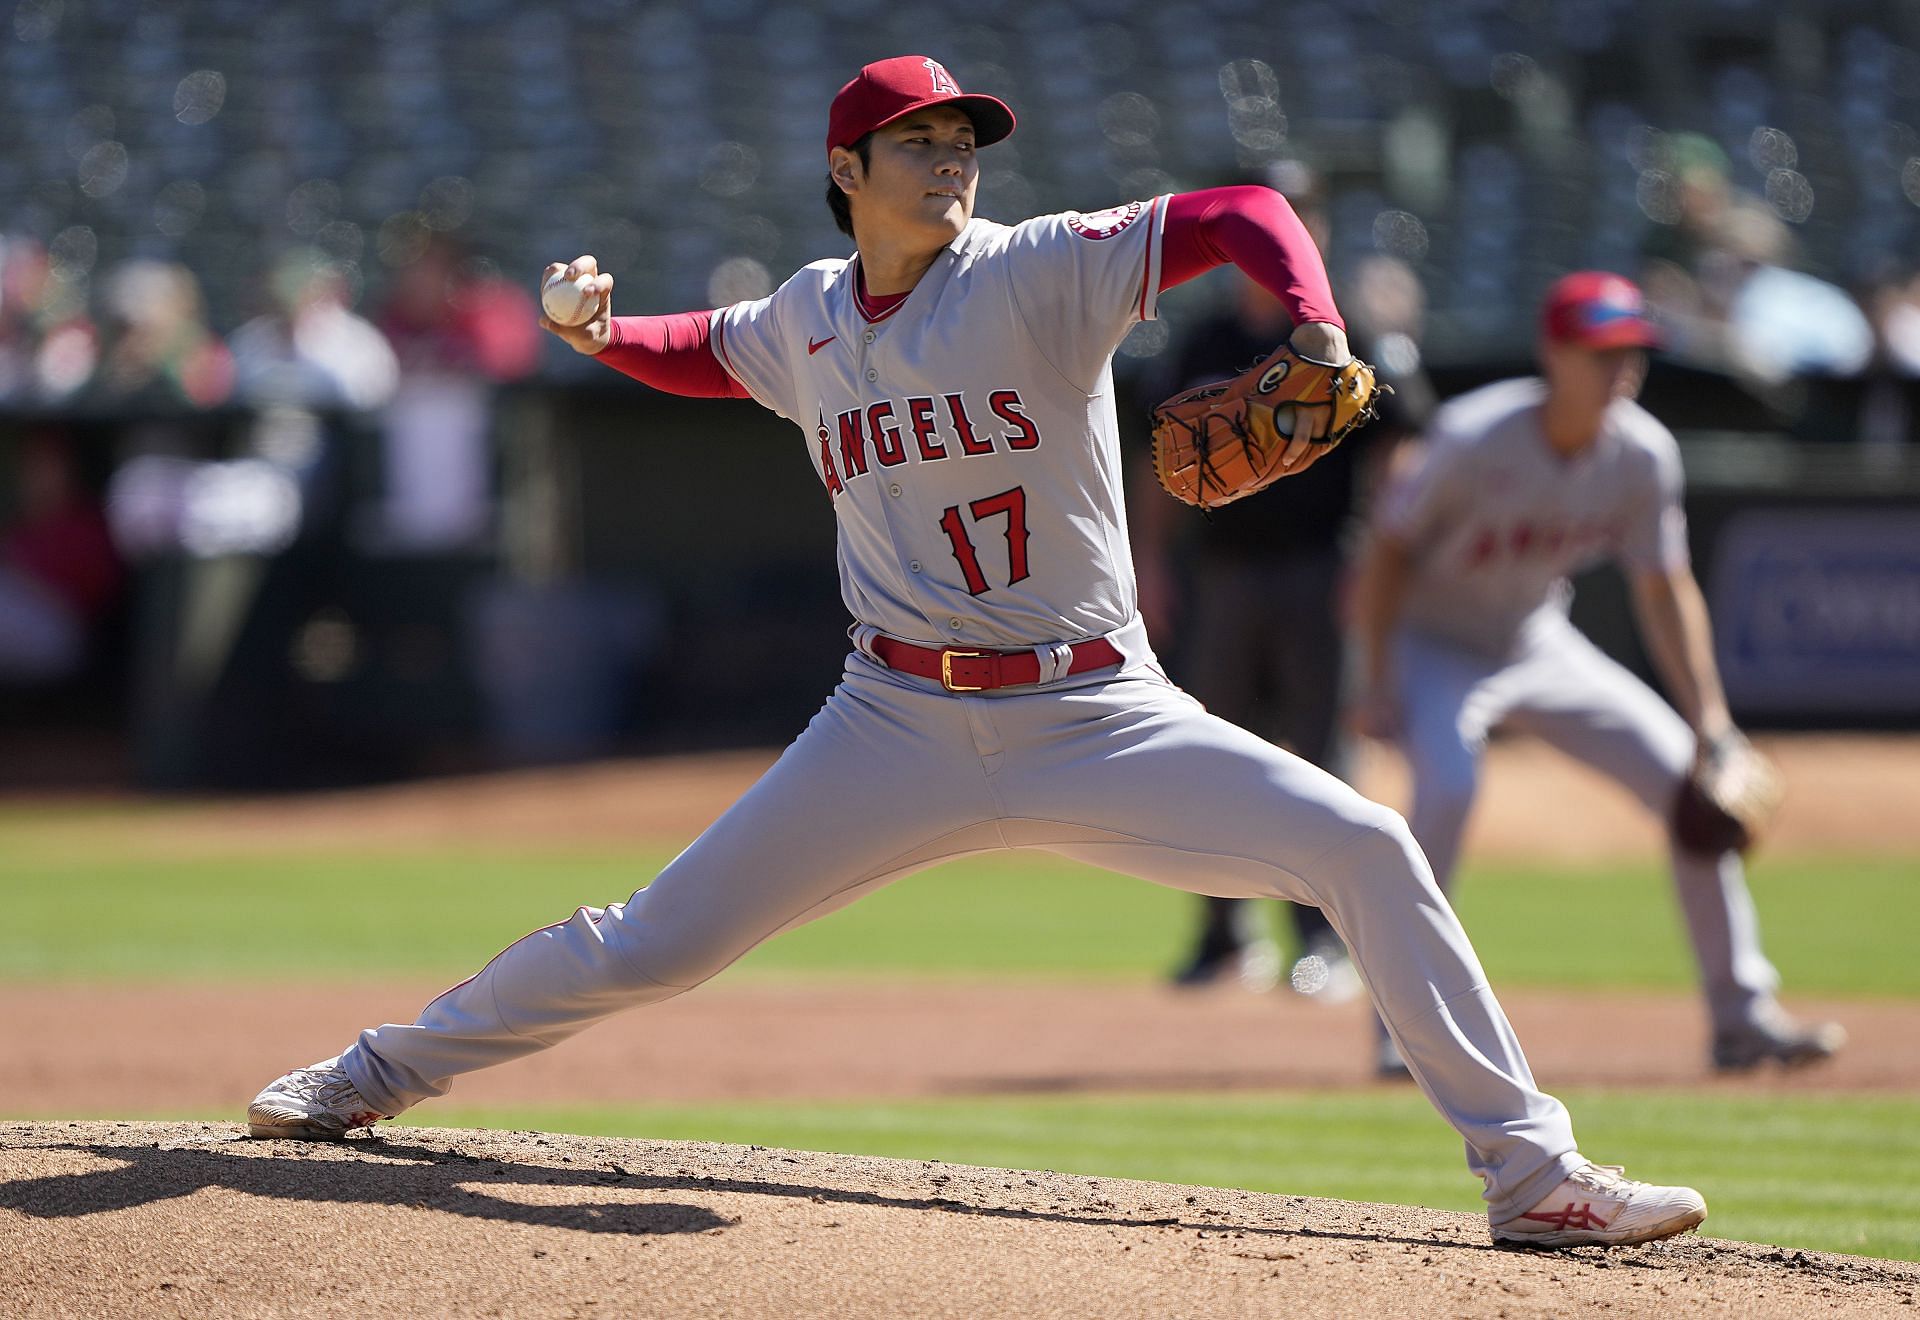 Los Angeles Angels pitcher Shohei Ohtani